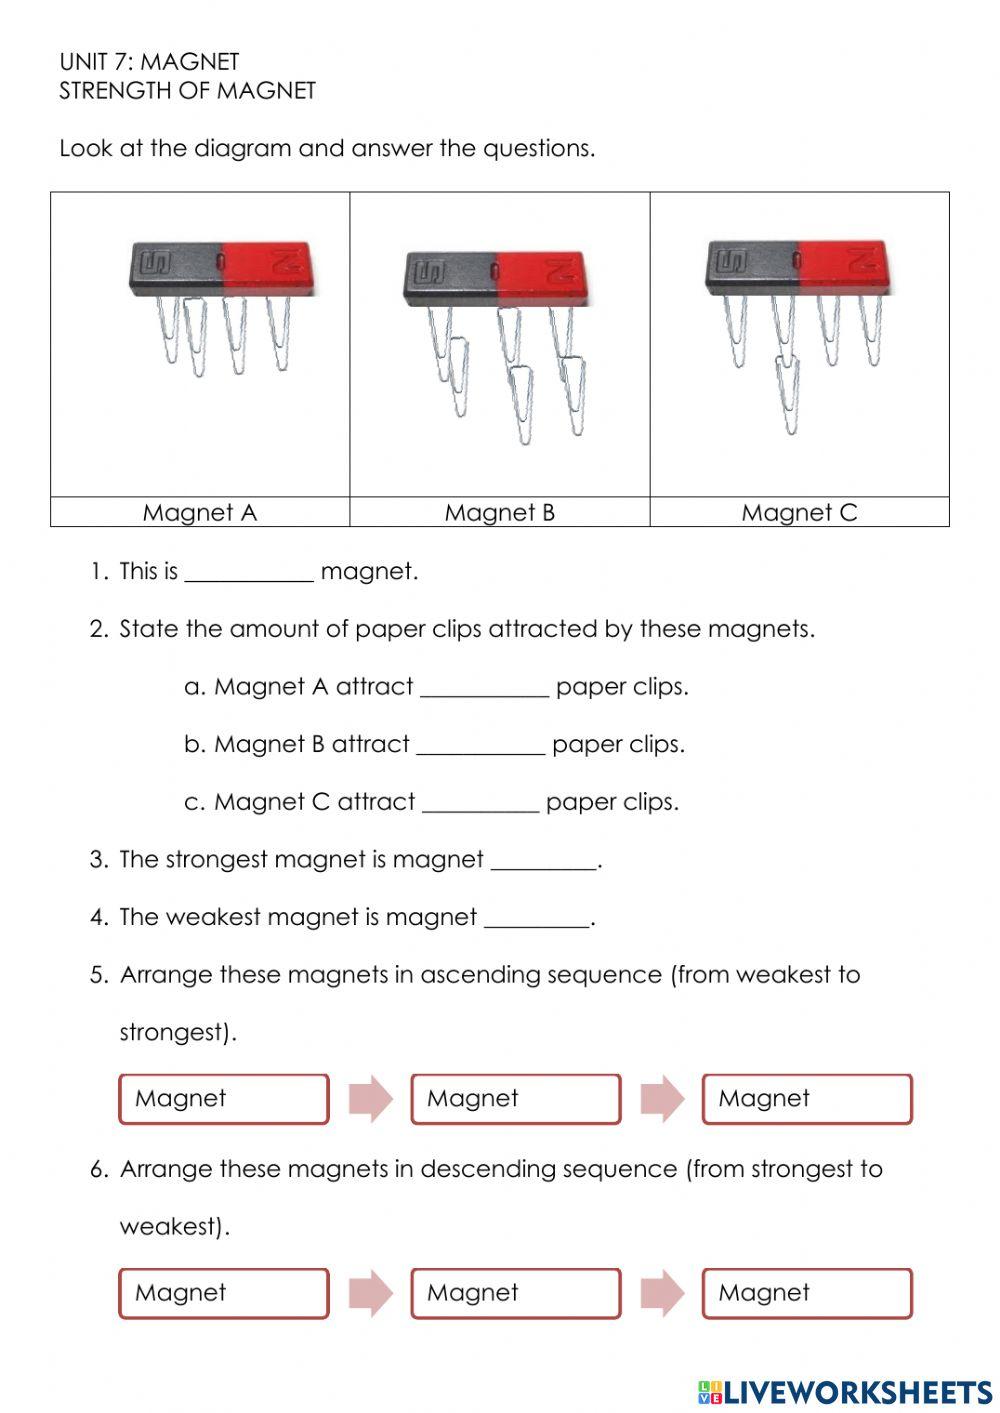 Strength of magnet